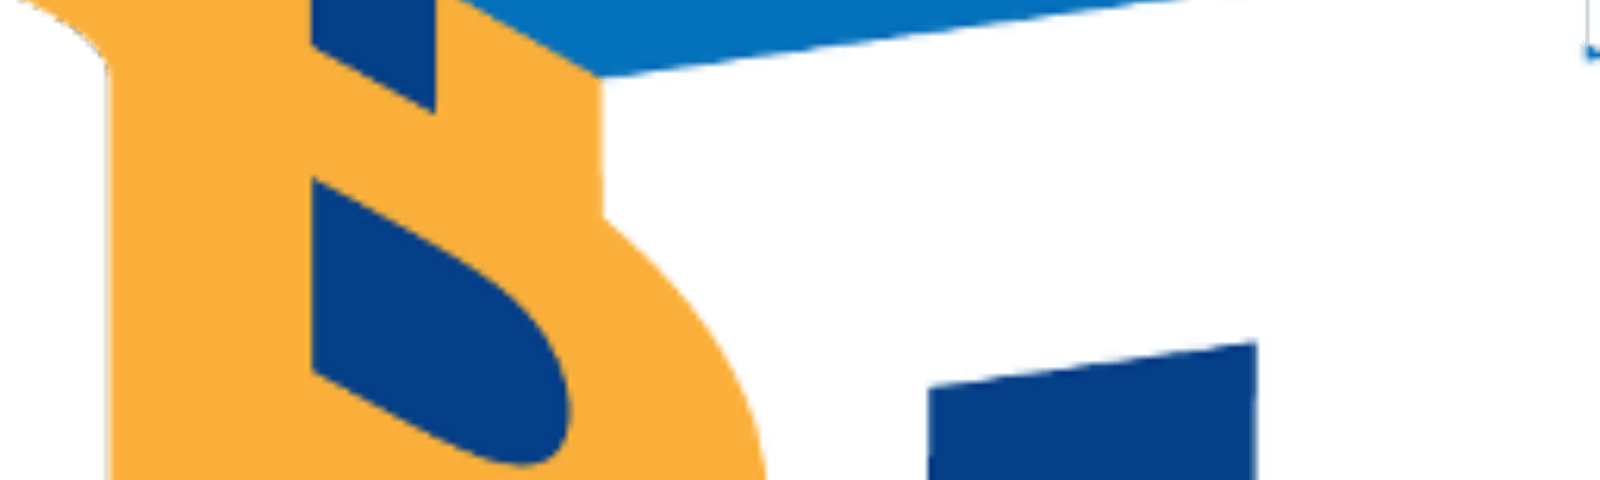 Blue and Yellow Capital M Logo - Digital Asset